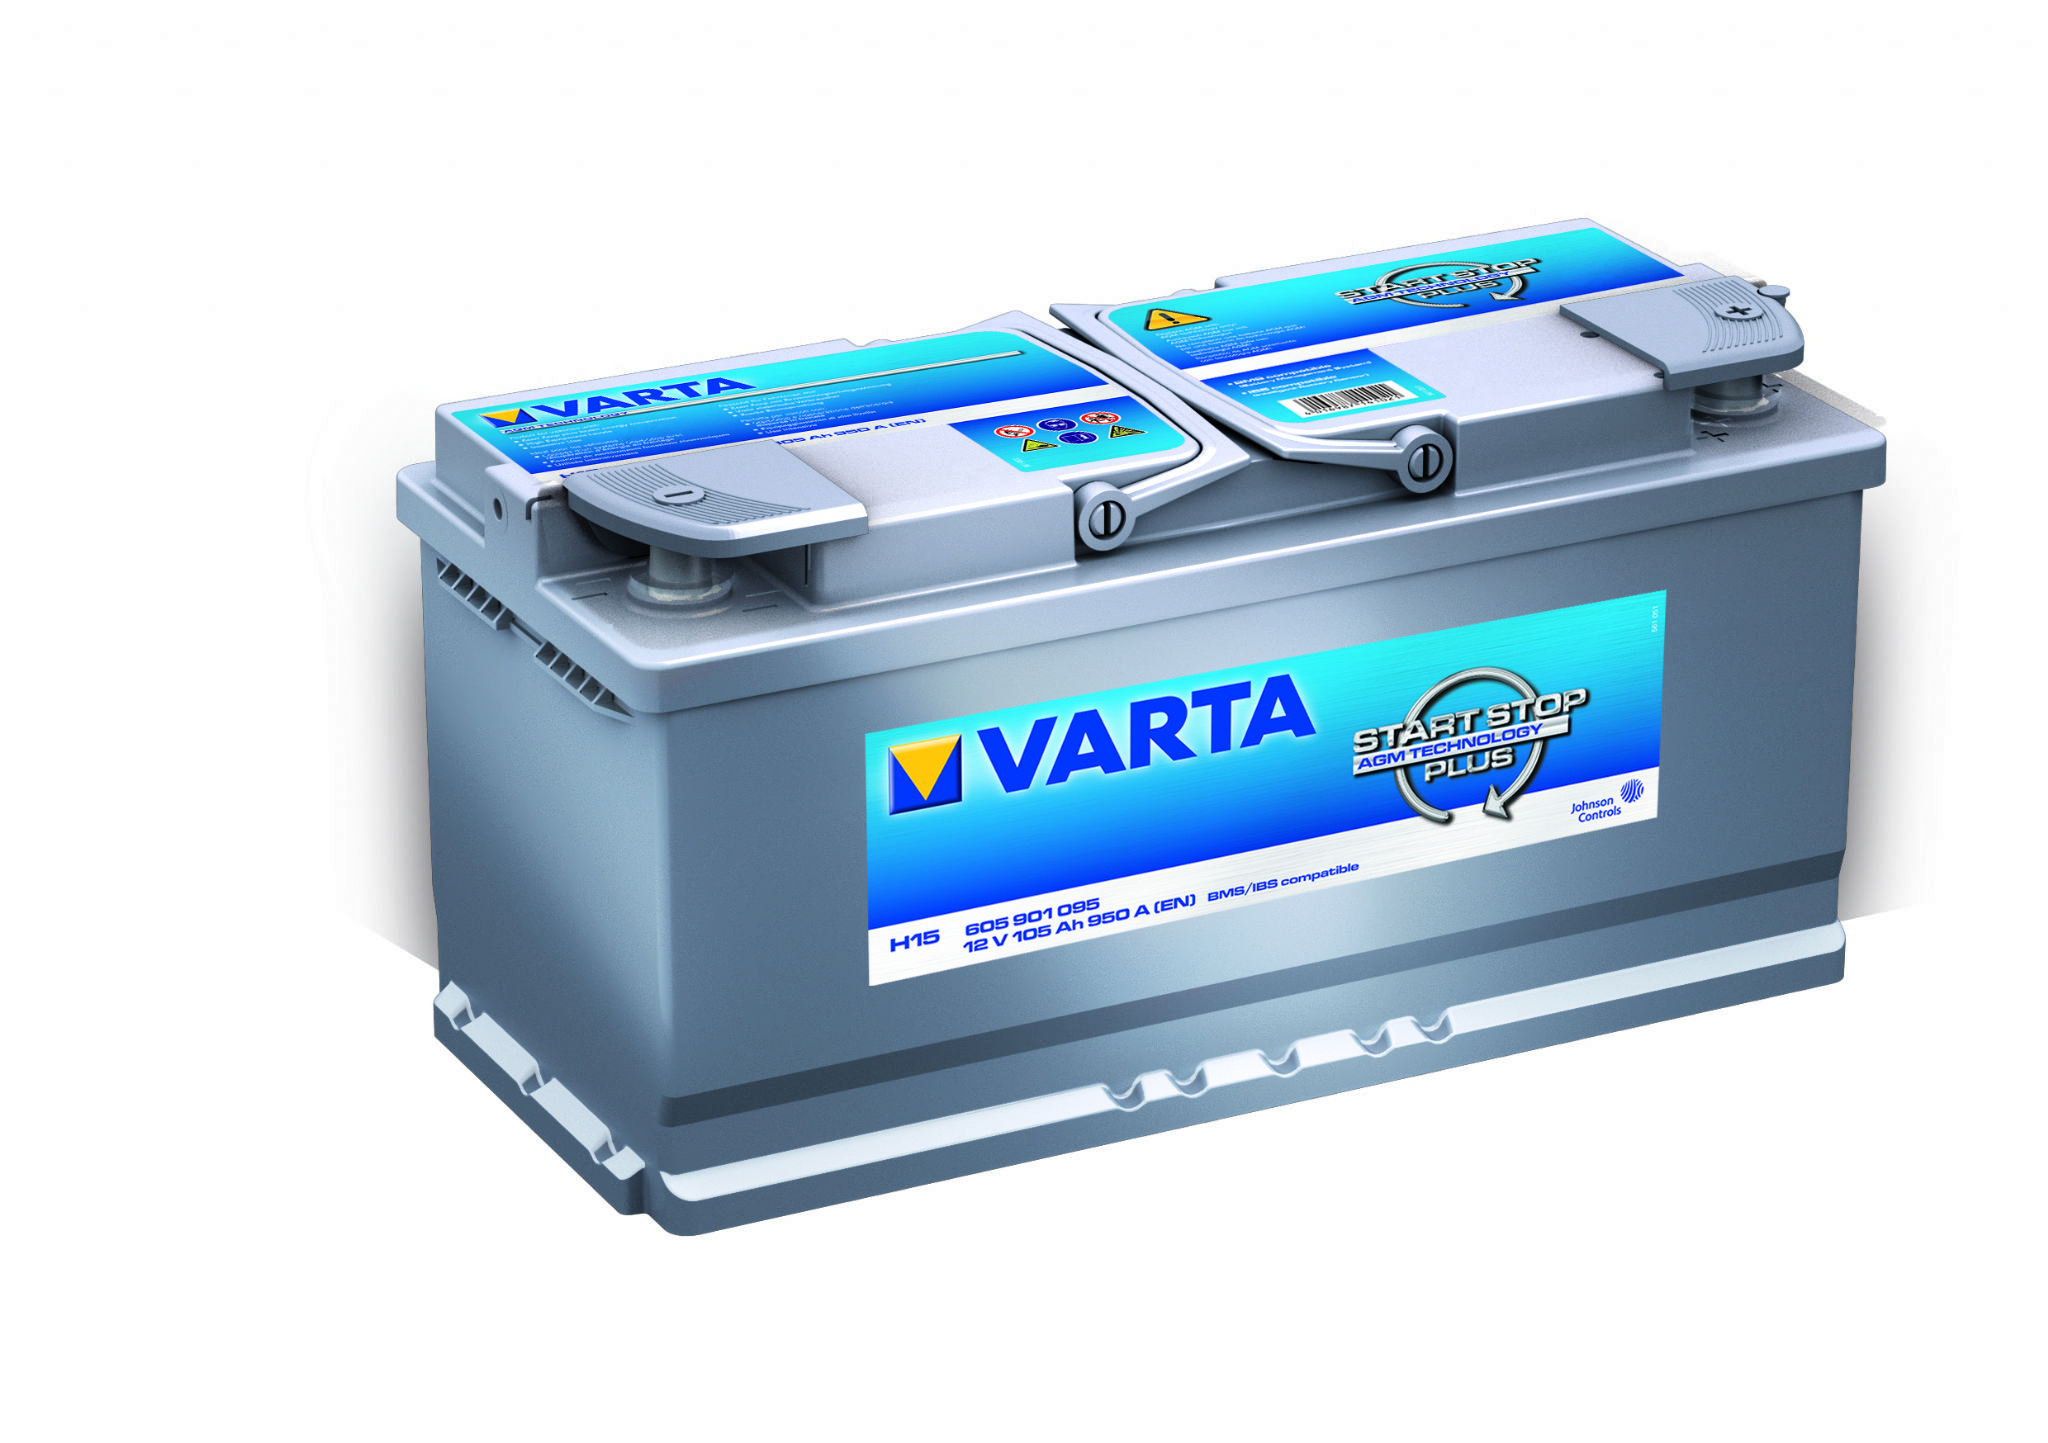 Продажа автомобильных аккумуляторов. 580901080 Varta. Varta h15 Silver Dynamic. Varta 80ah. 580 901 080 Varta.